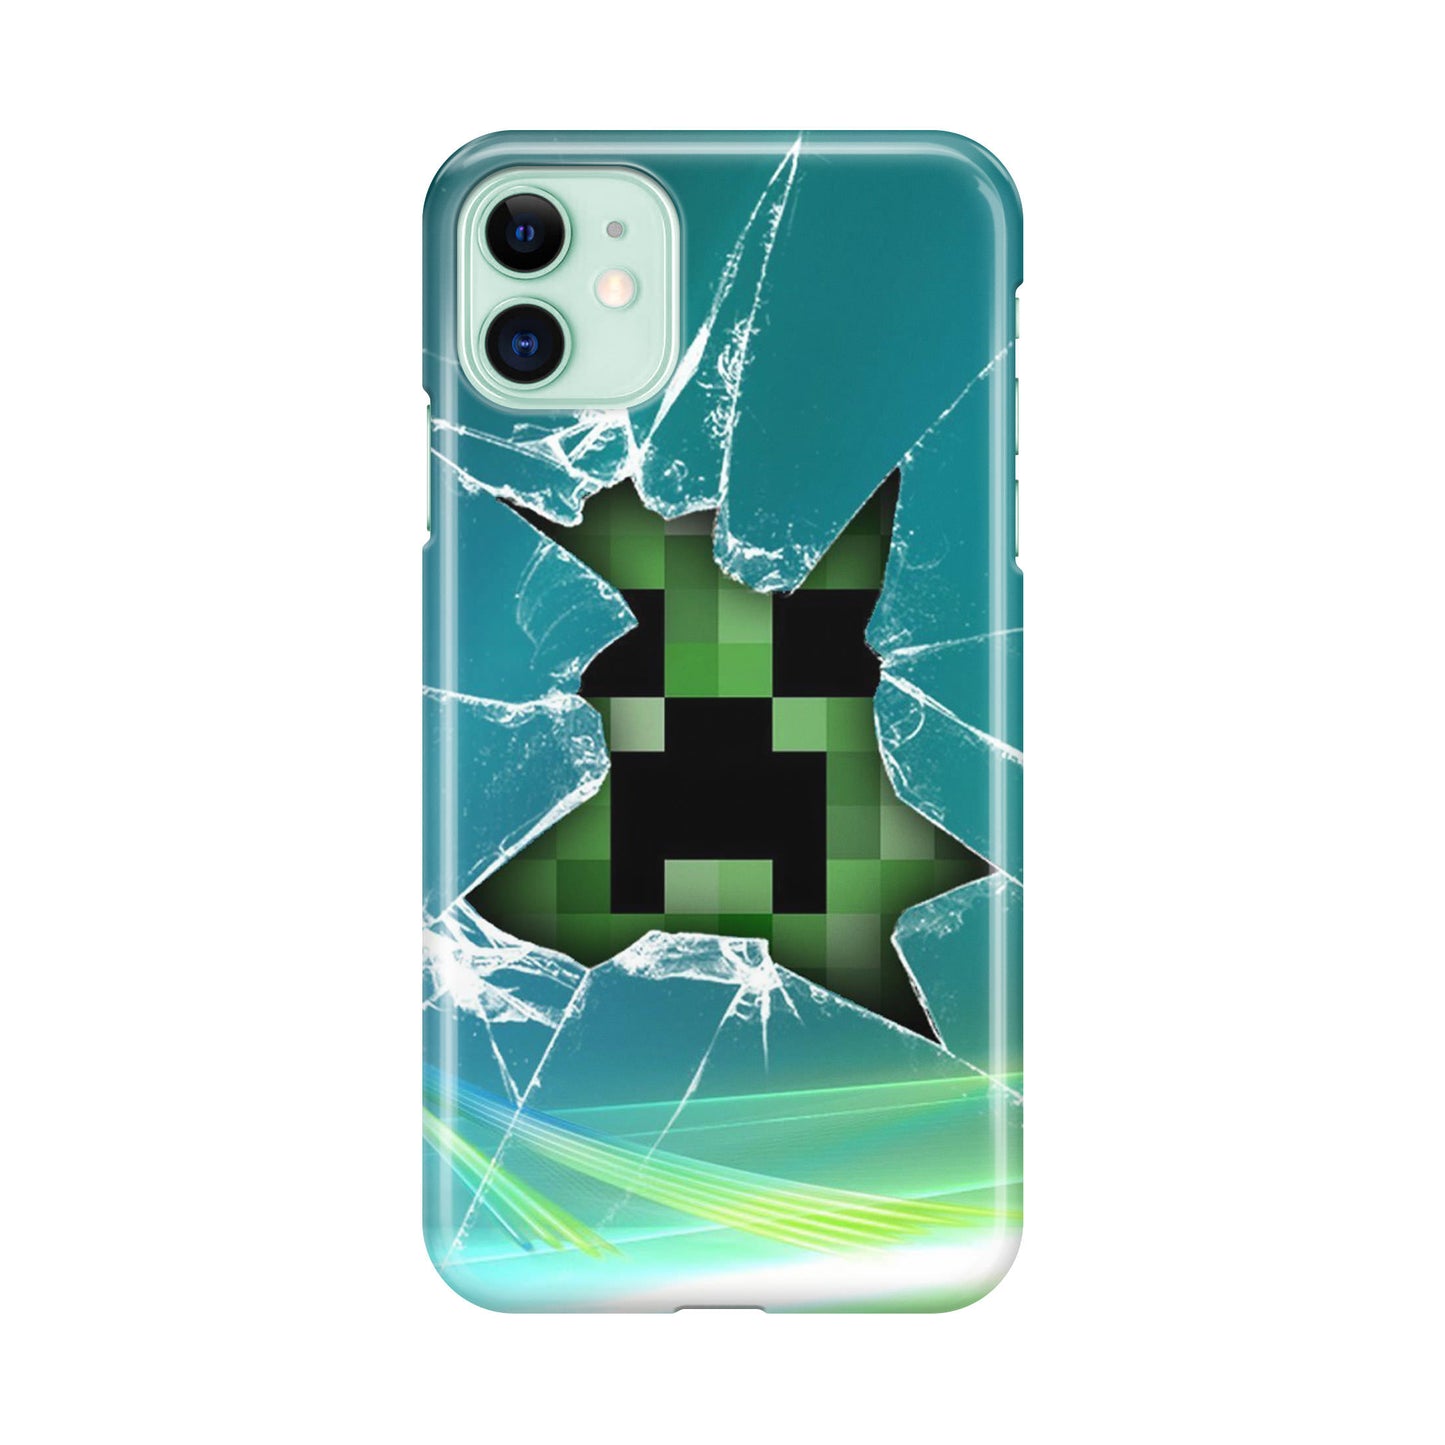 Creeper Glass Broken Green iPhone 12 mini Case